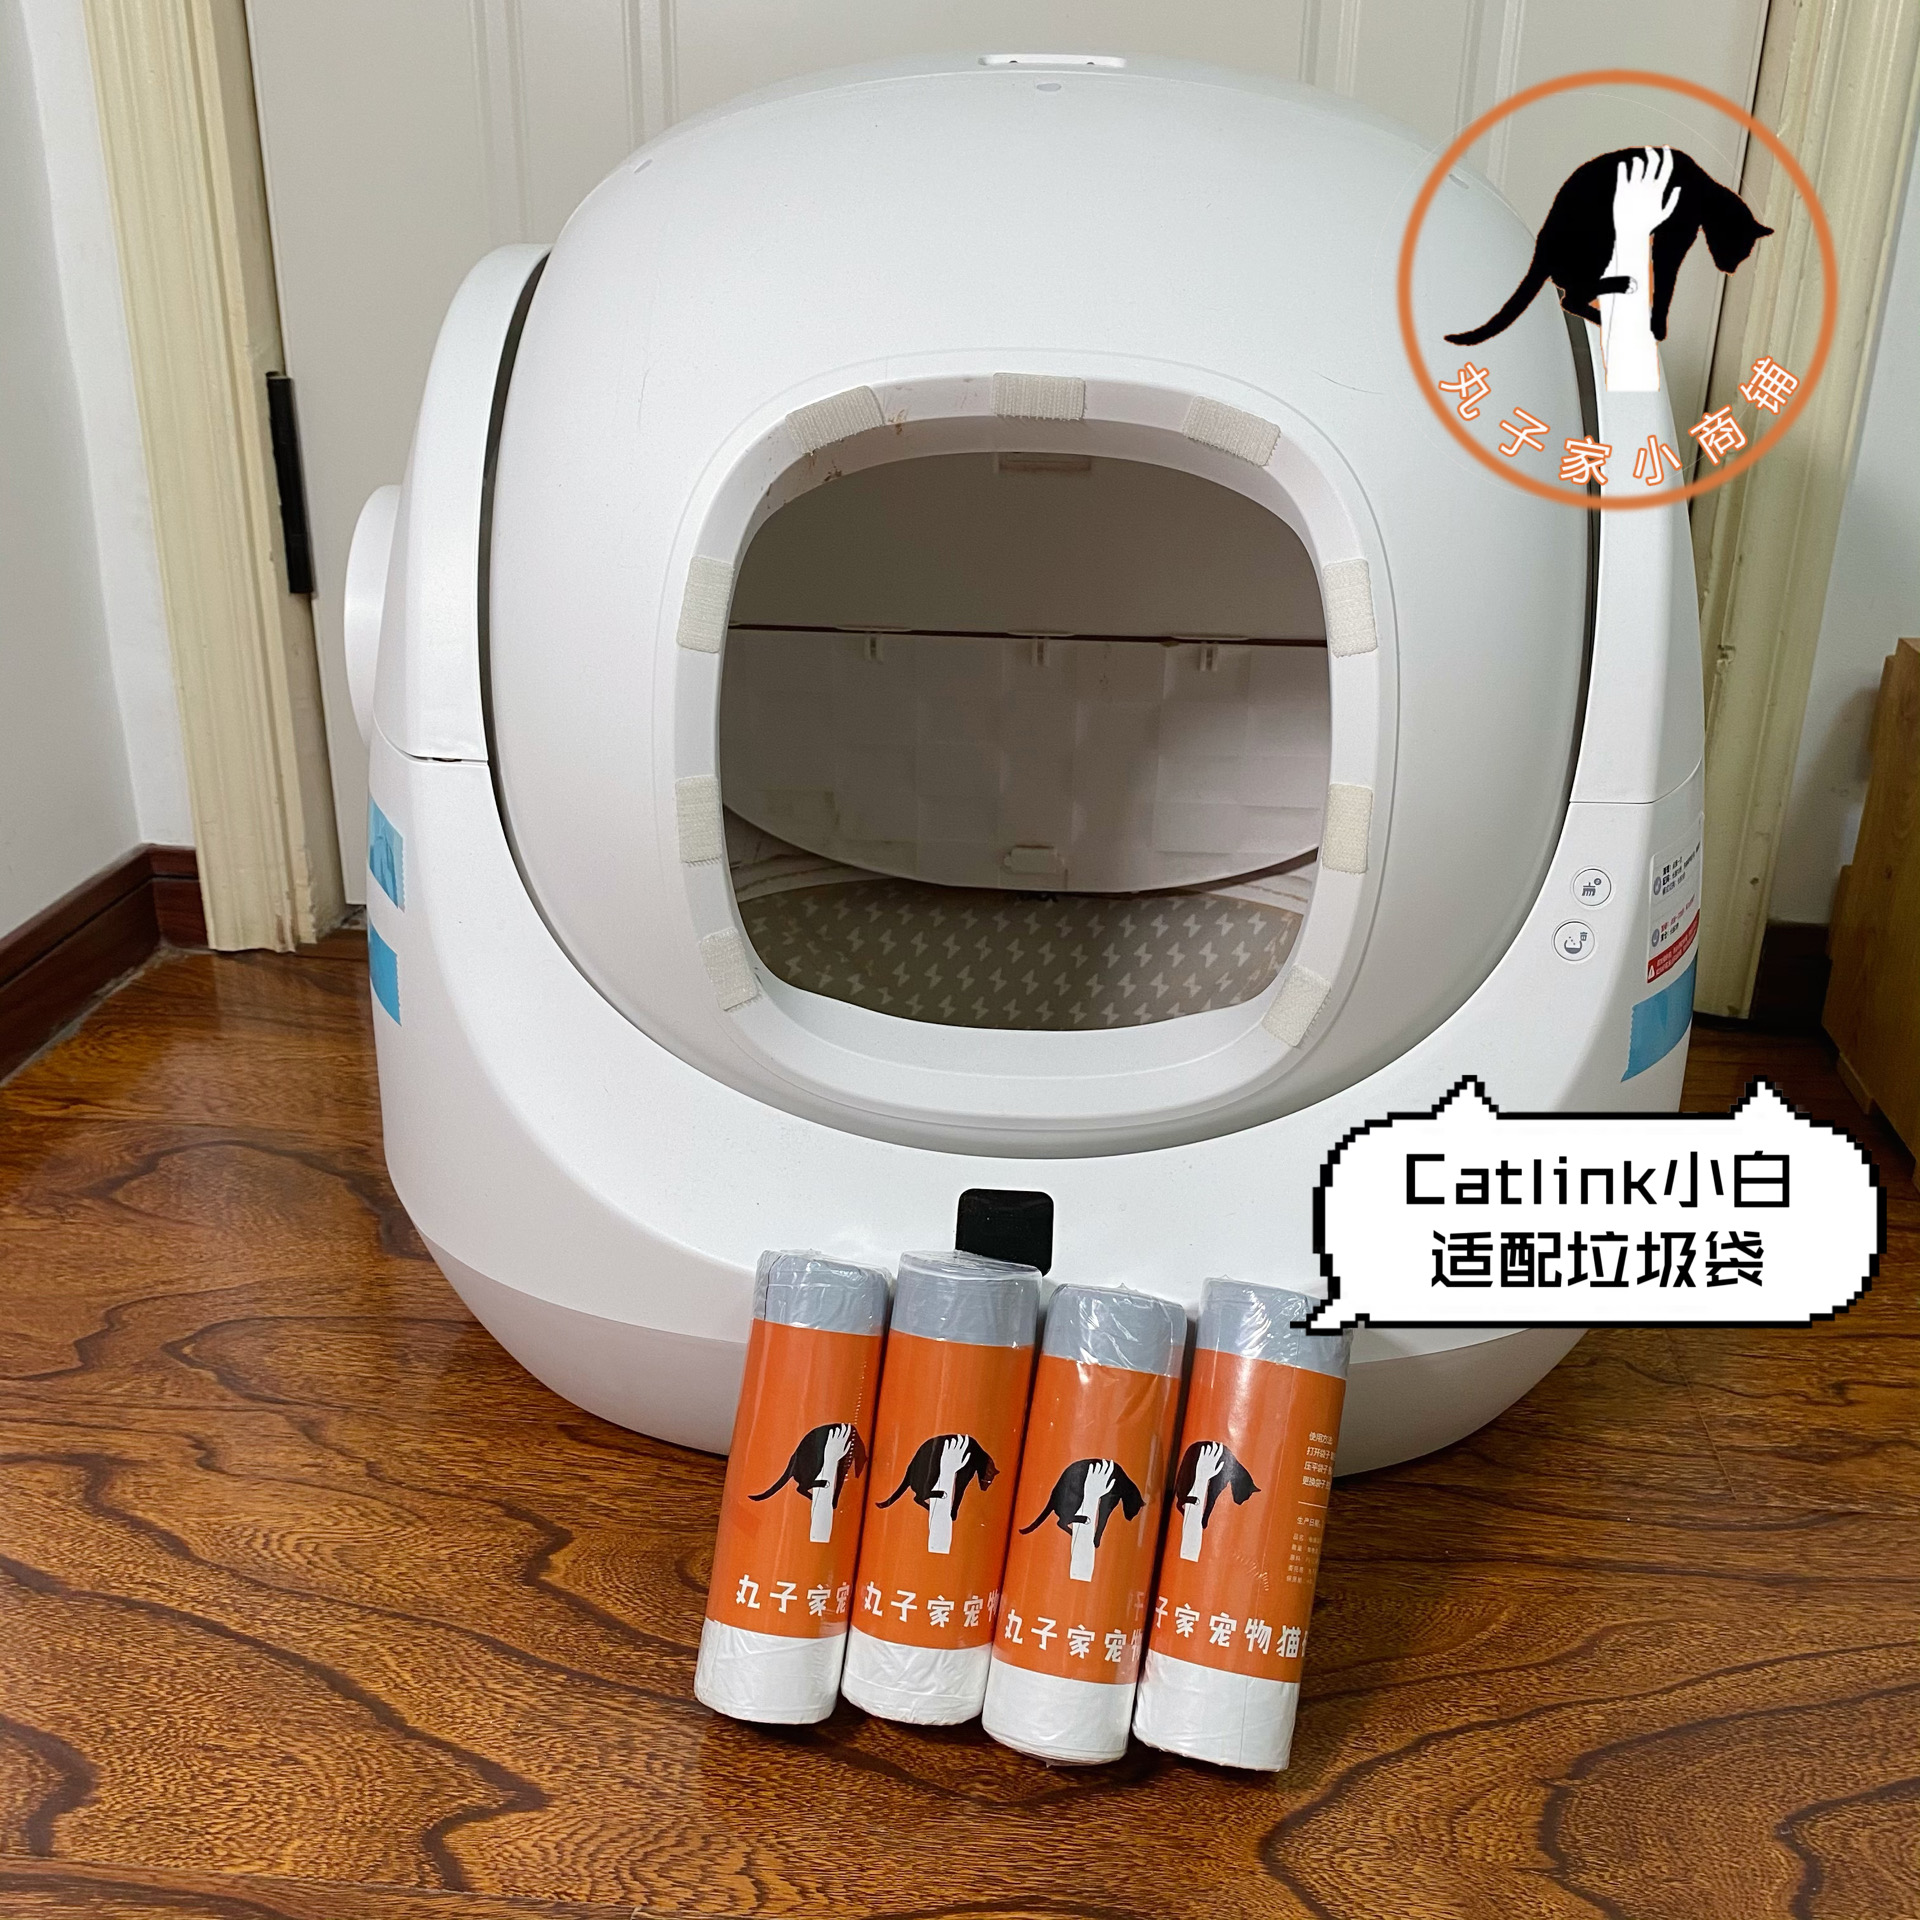 Catlink Xiaobai/Pro/ProX 猫トイレアダプターゴミ袋